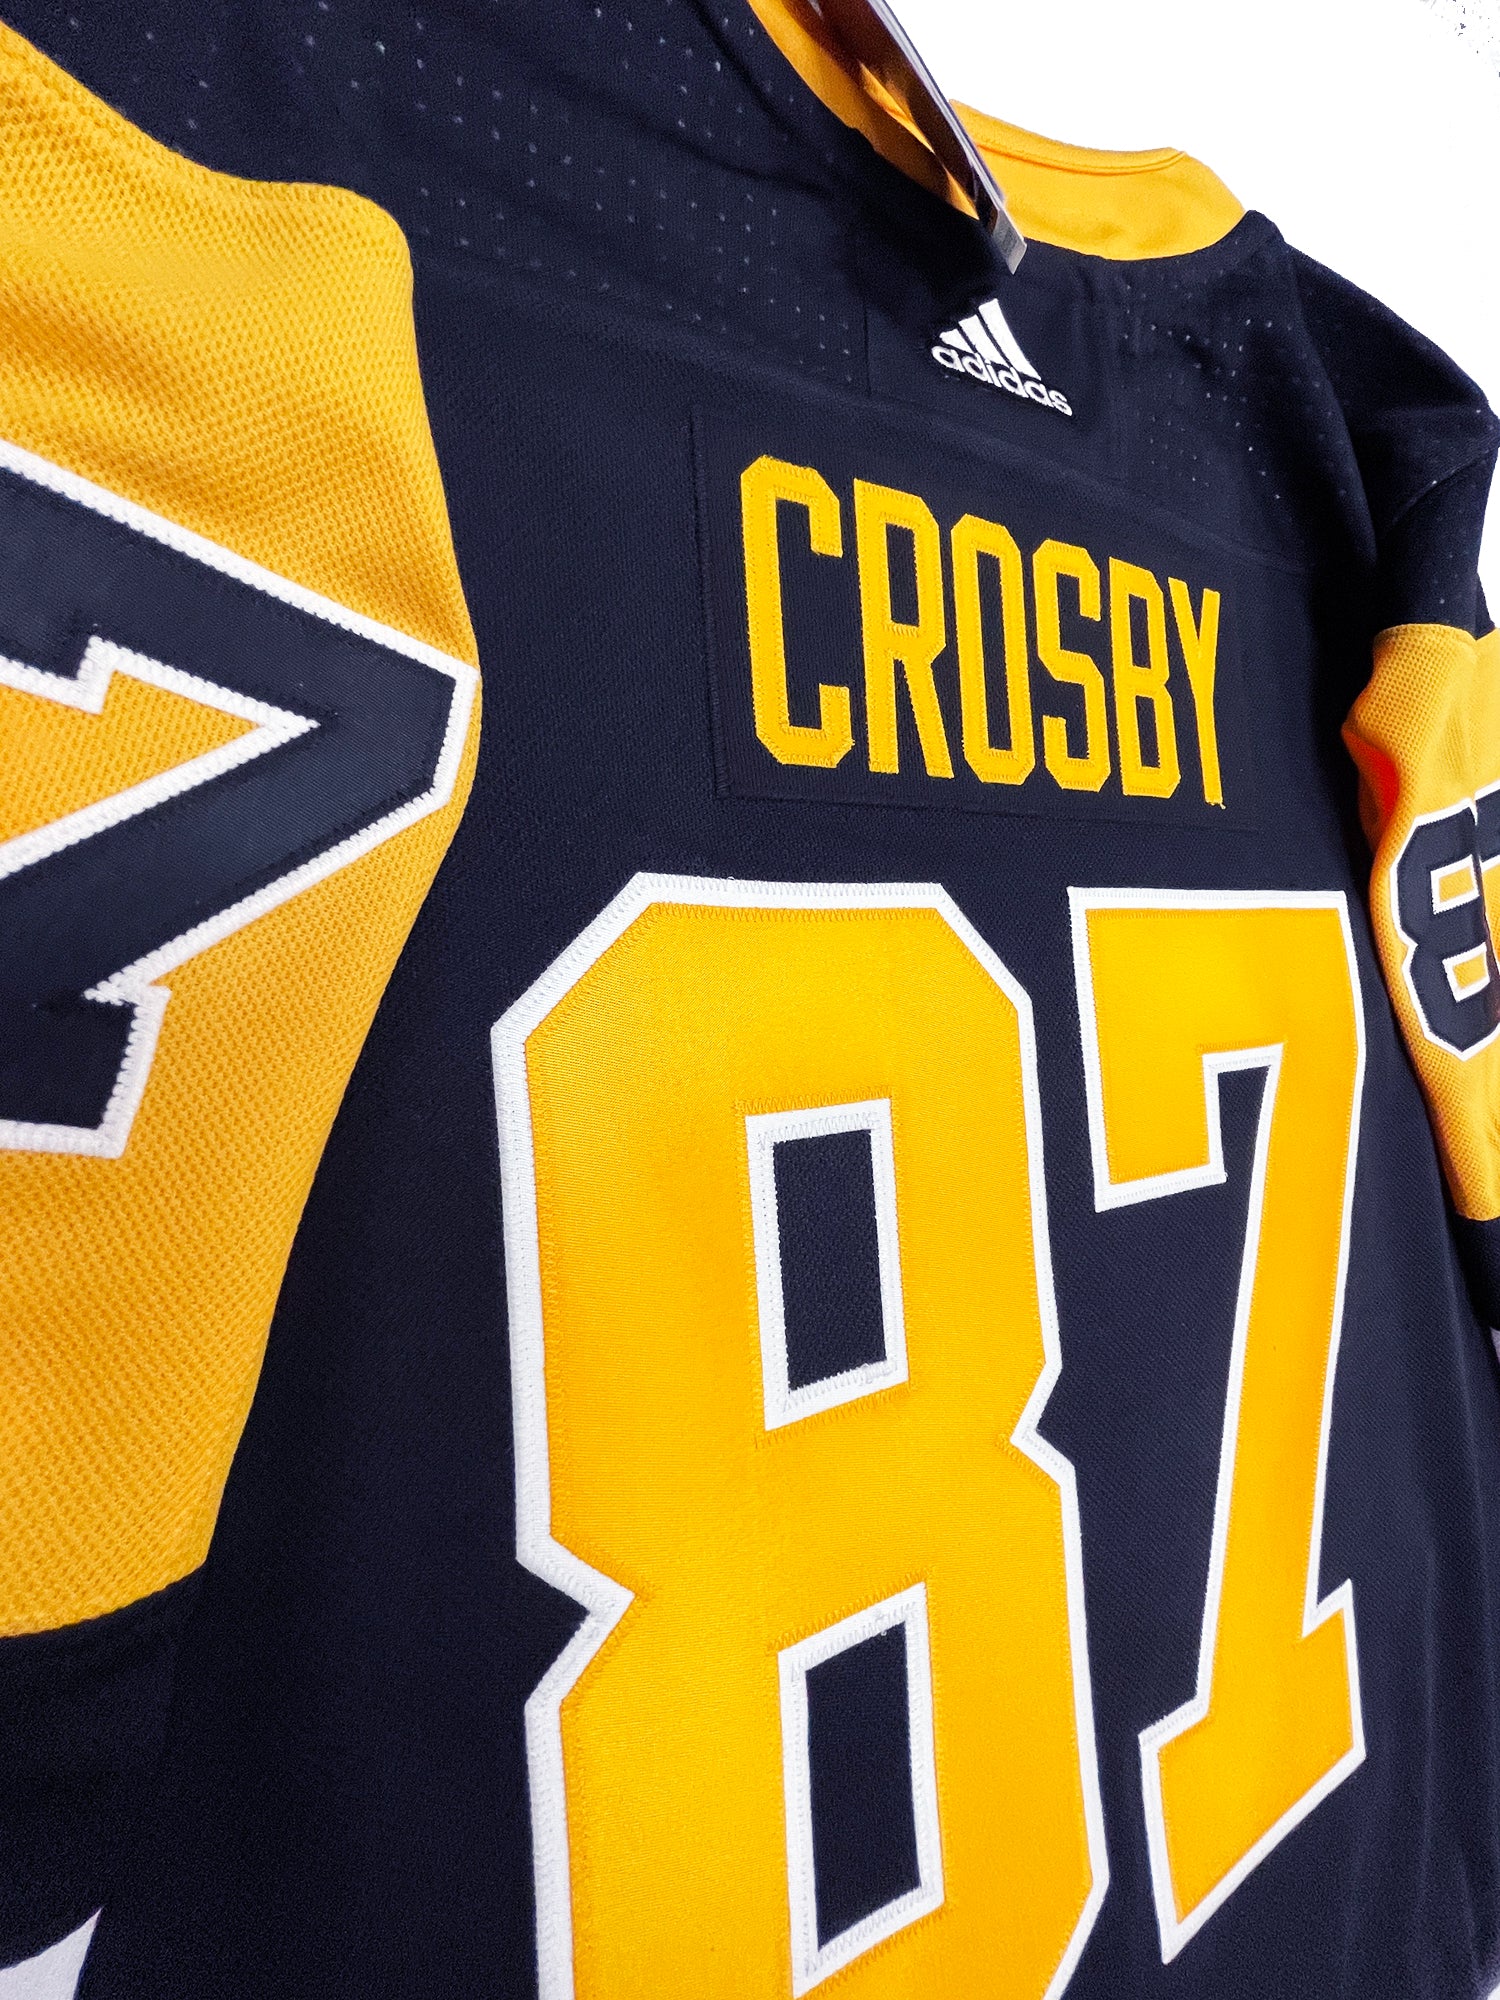 Adidas unveils minor tweaks to Penguins' jerseys